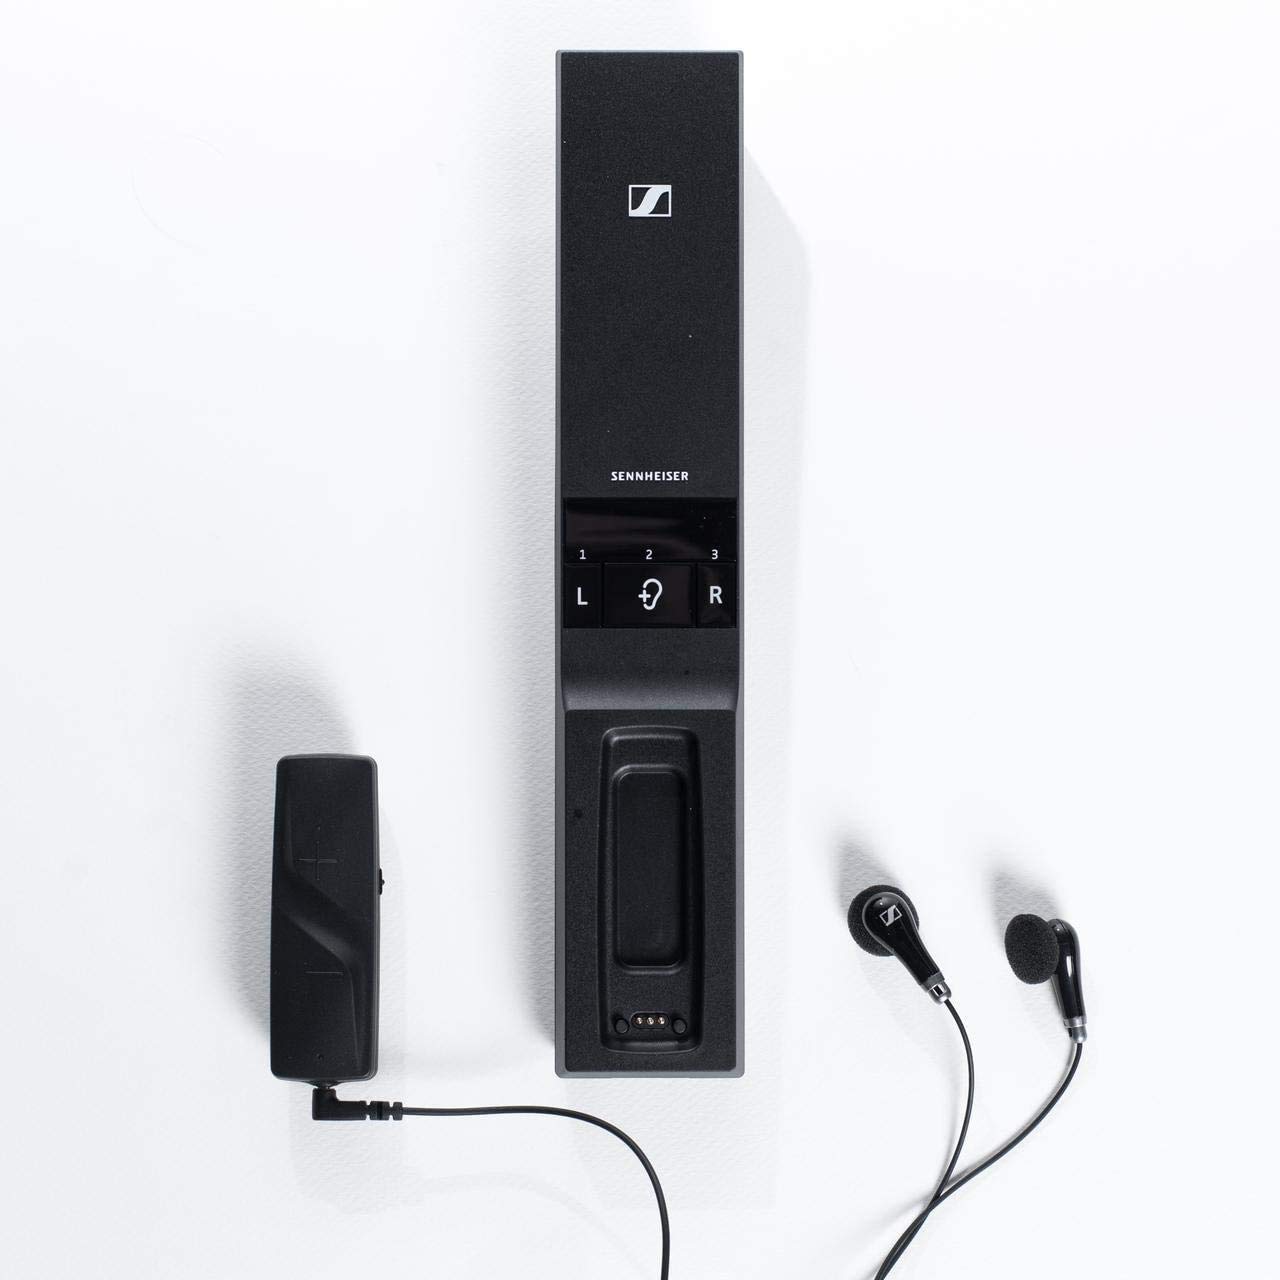 Sennheiser Consumer Audio Flex 5000 デジタル ワイヤレス ヘッドフォン テレビ視聴用 - ブラック